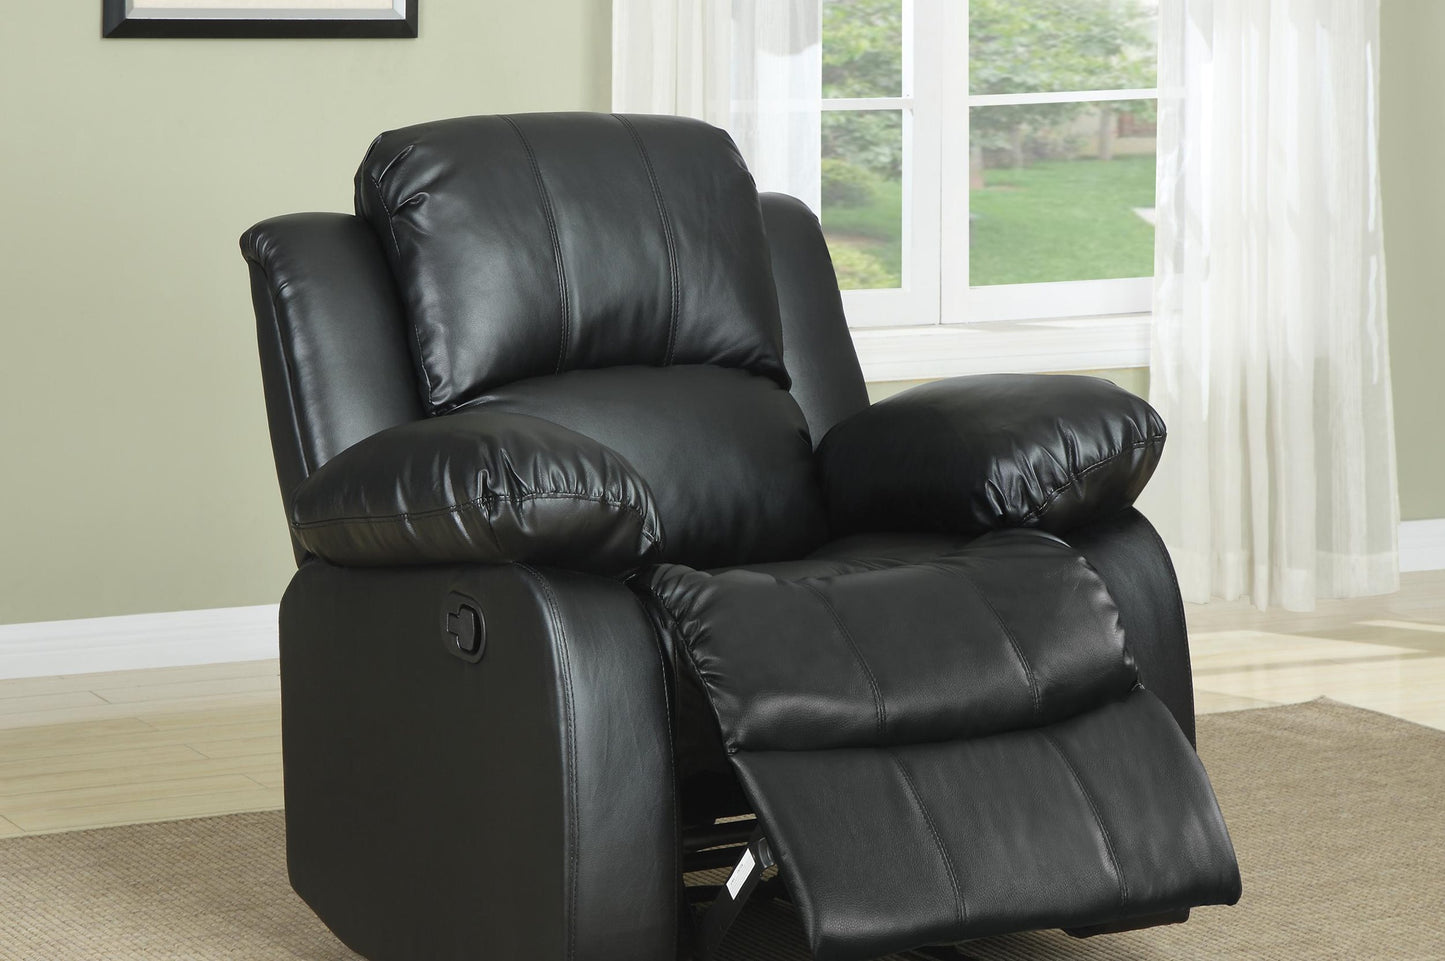 Homelegance Cranley Recliner Chair in Leather - Black